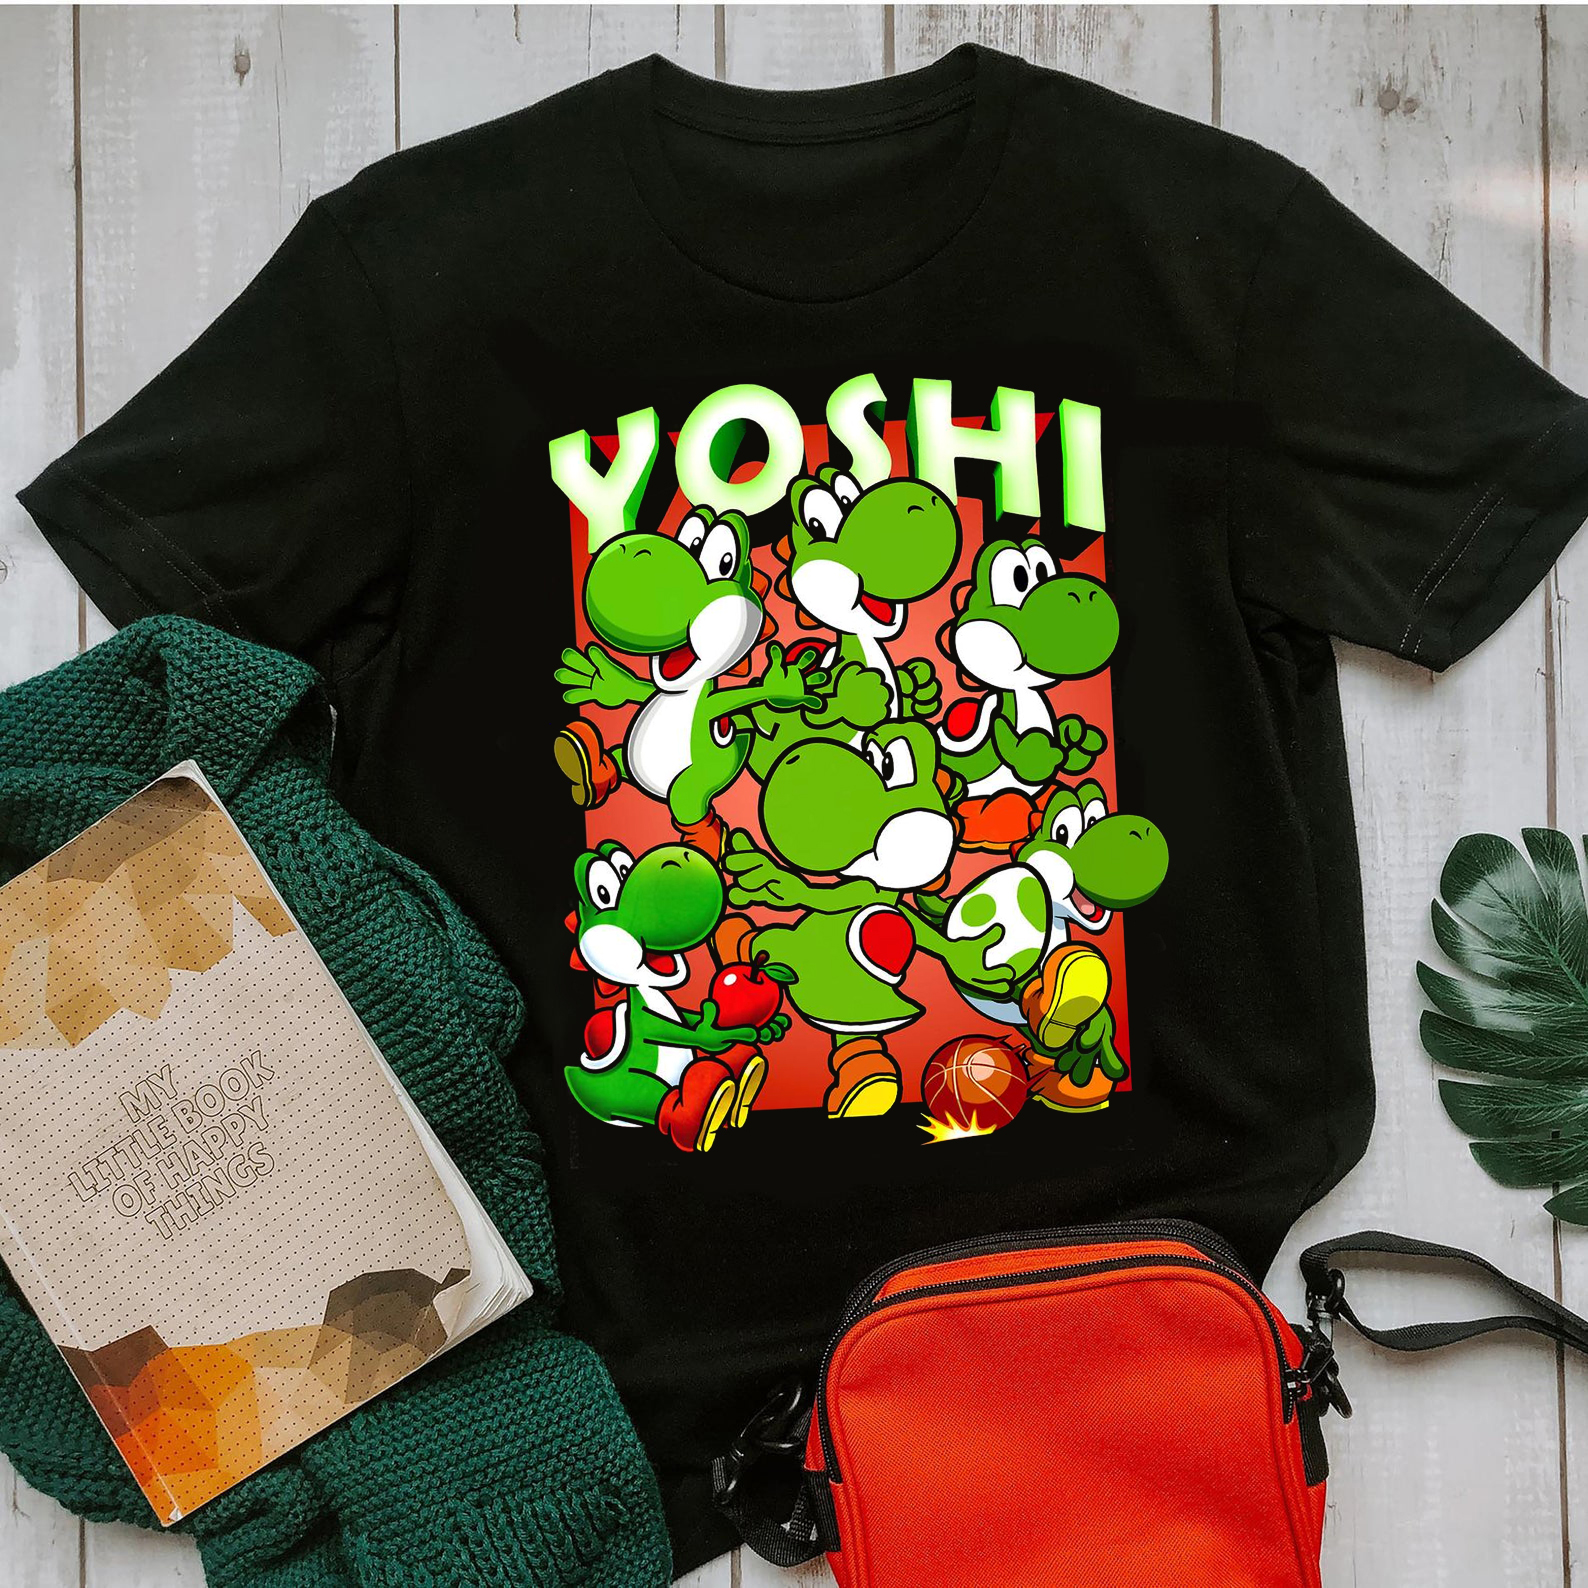 Yoshi Super Mario Custom T Shirt Unisex Mens & Women's Style Clothing, Youth Shirts, Retro Tees, Vintage Shirt